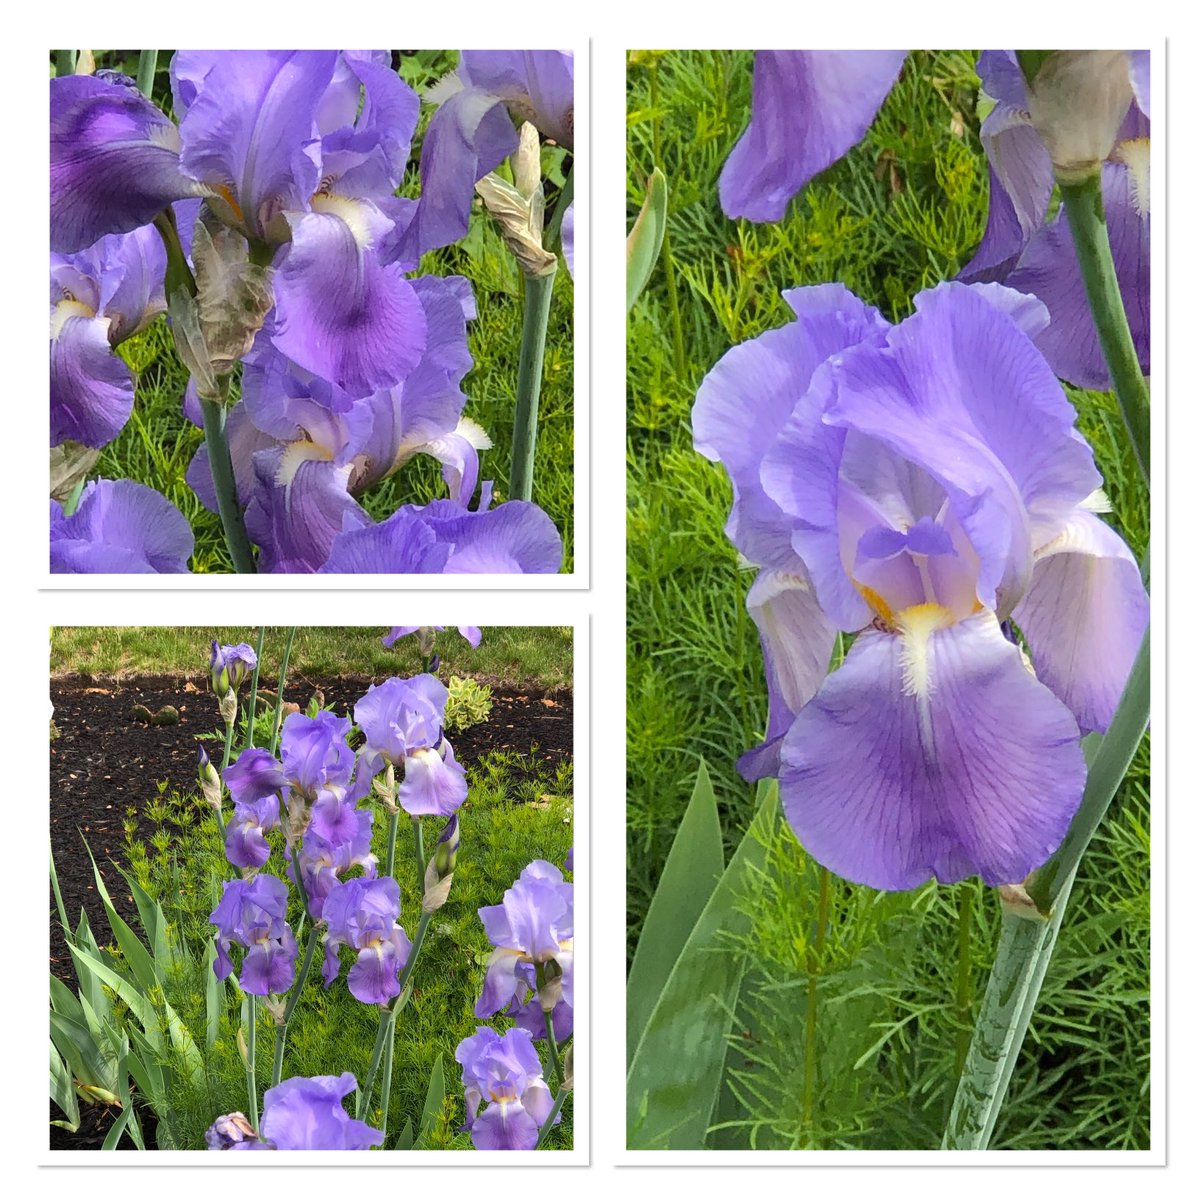 #Irises in my front garden from years past. 
🌱 Enjoy your day 🌱 

#TuesdayBlue #mygarden #flowerphotography #GardeningTwitter